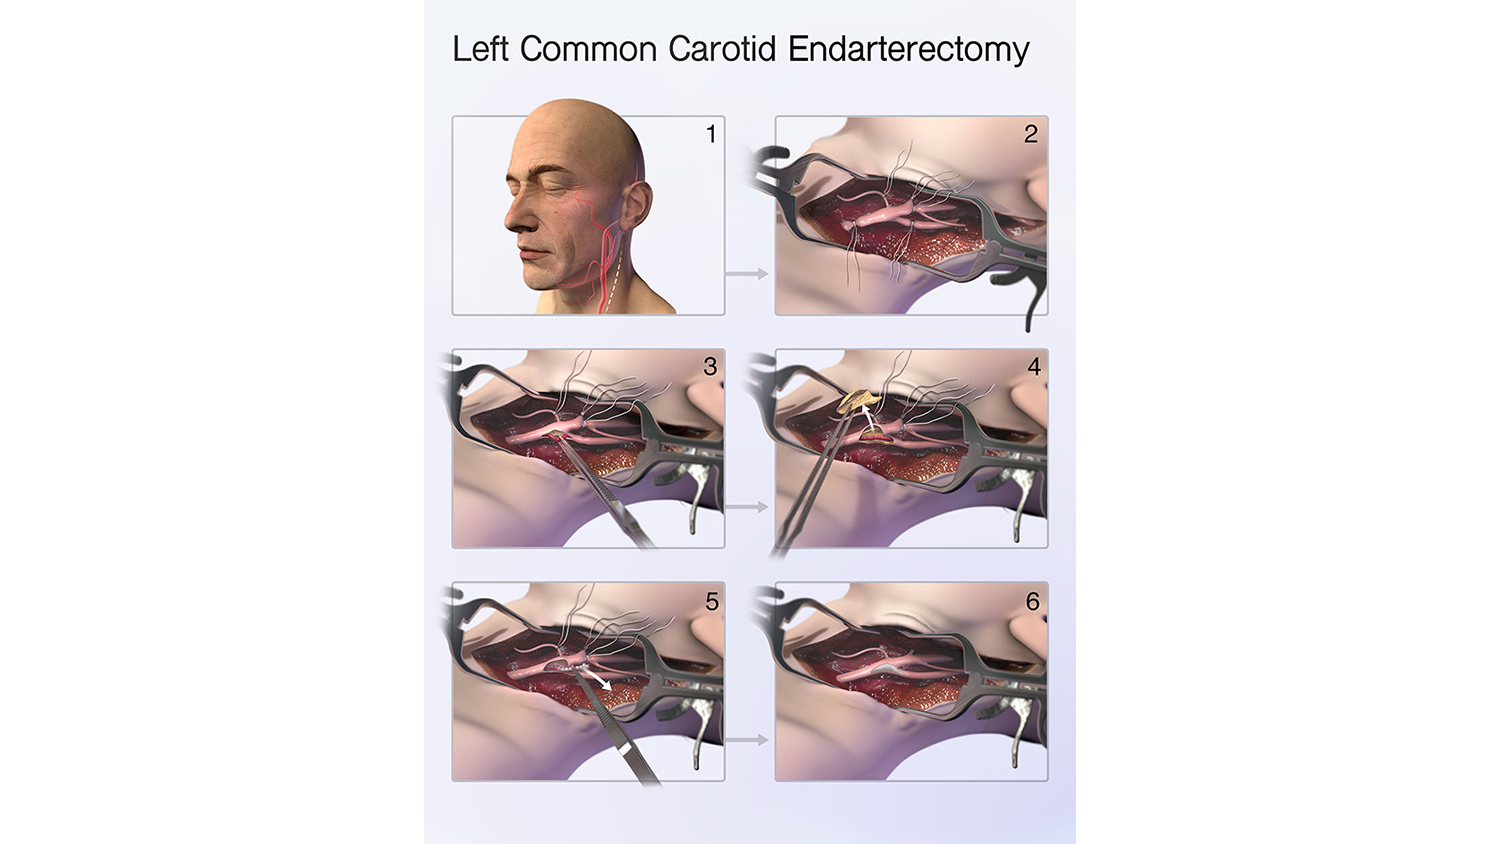 an illustration of a left common carotid endarterectomy